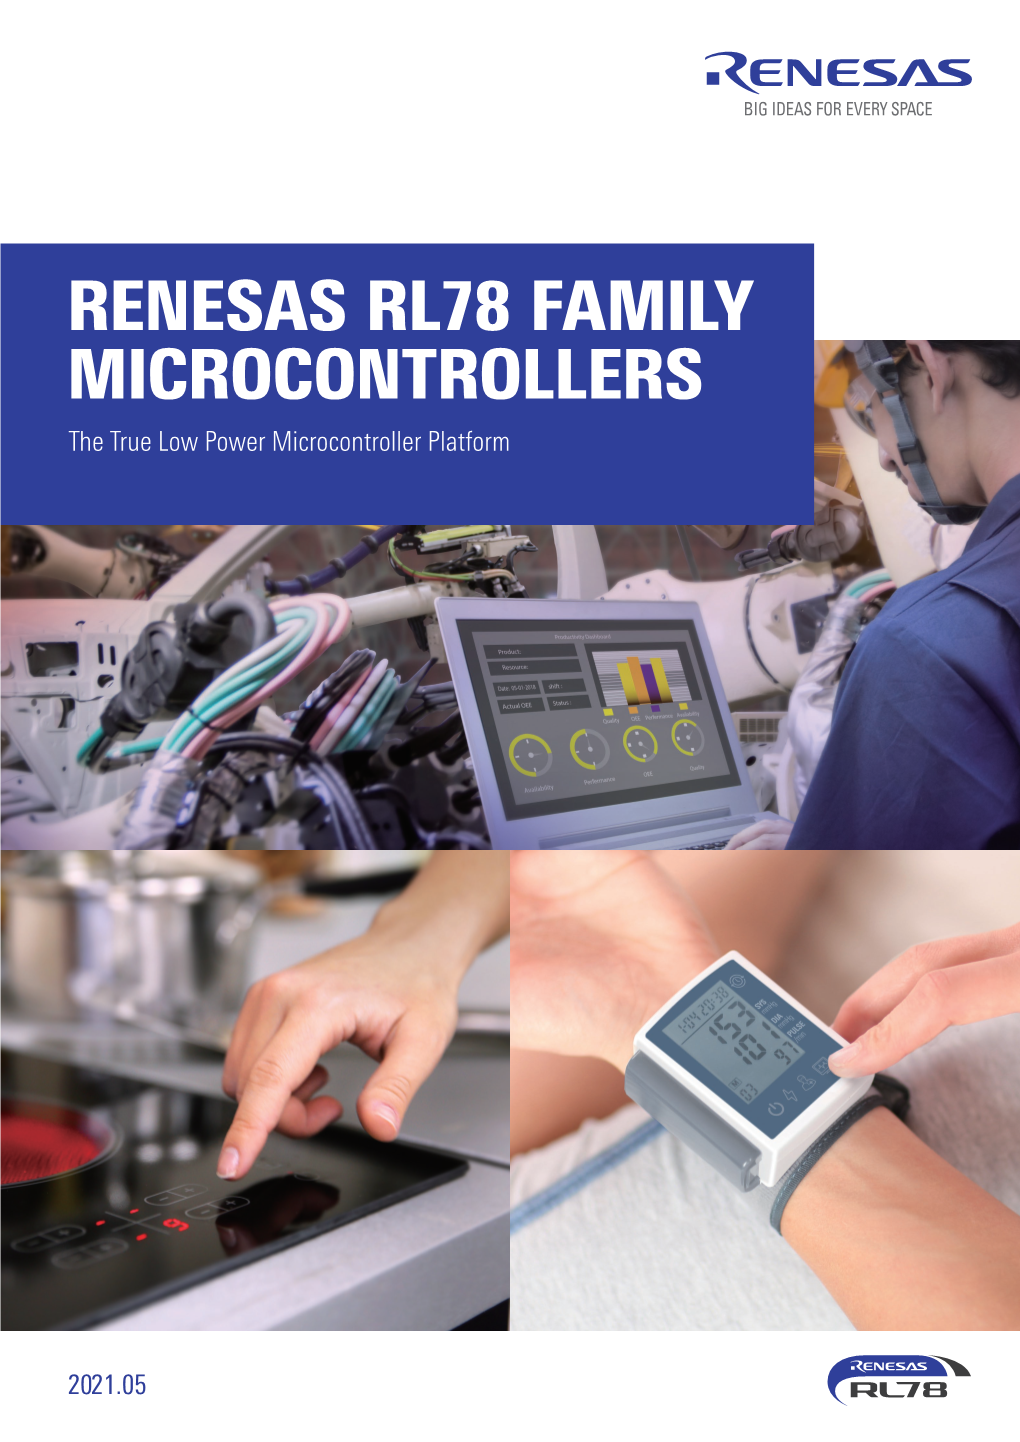 Renesas RL78 Family Microcontrollers Brochure